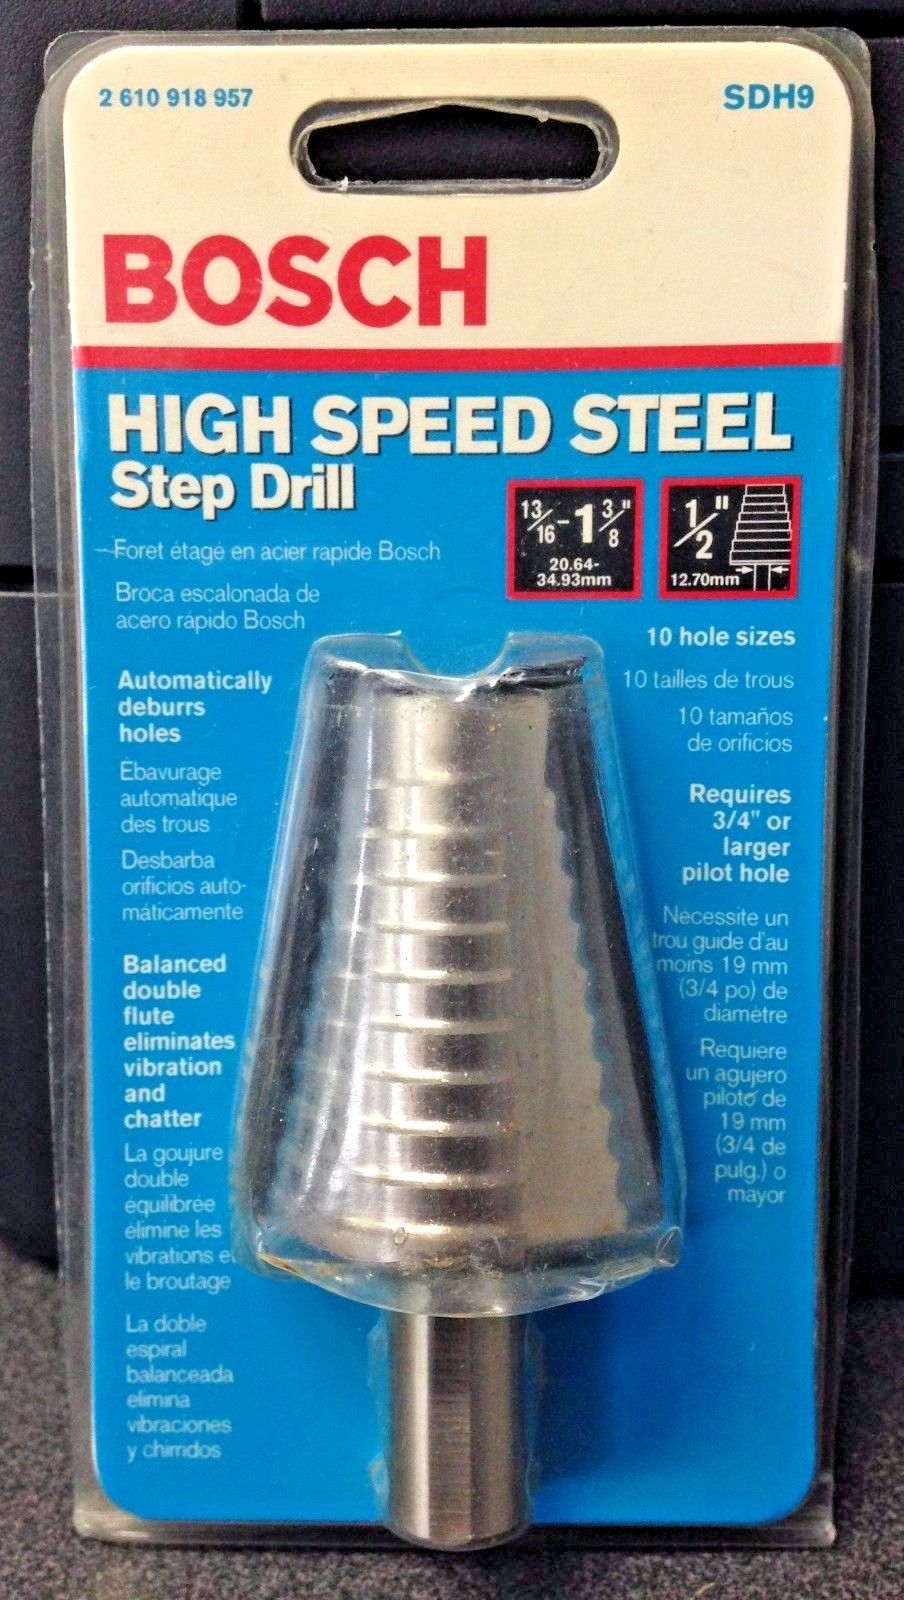 Bosch SDH9 13/16"- 1-3/8" High Speed Steel Step Drill Bit 10 Hole Sizes USA